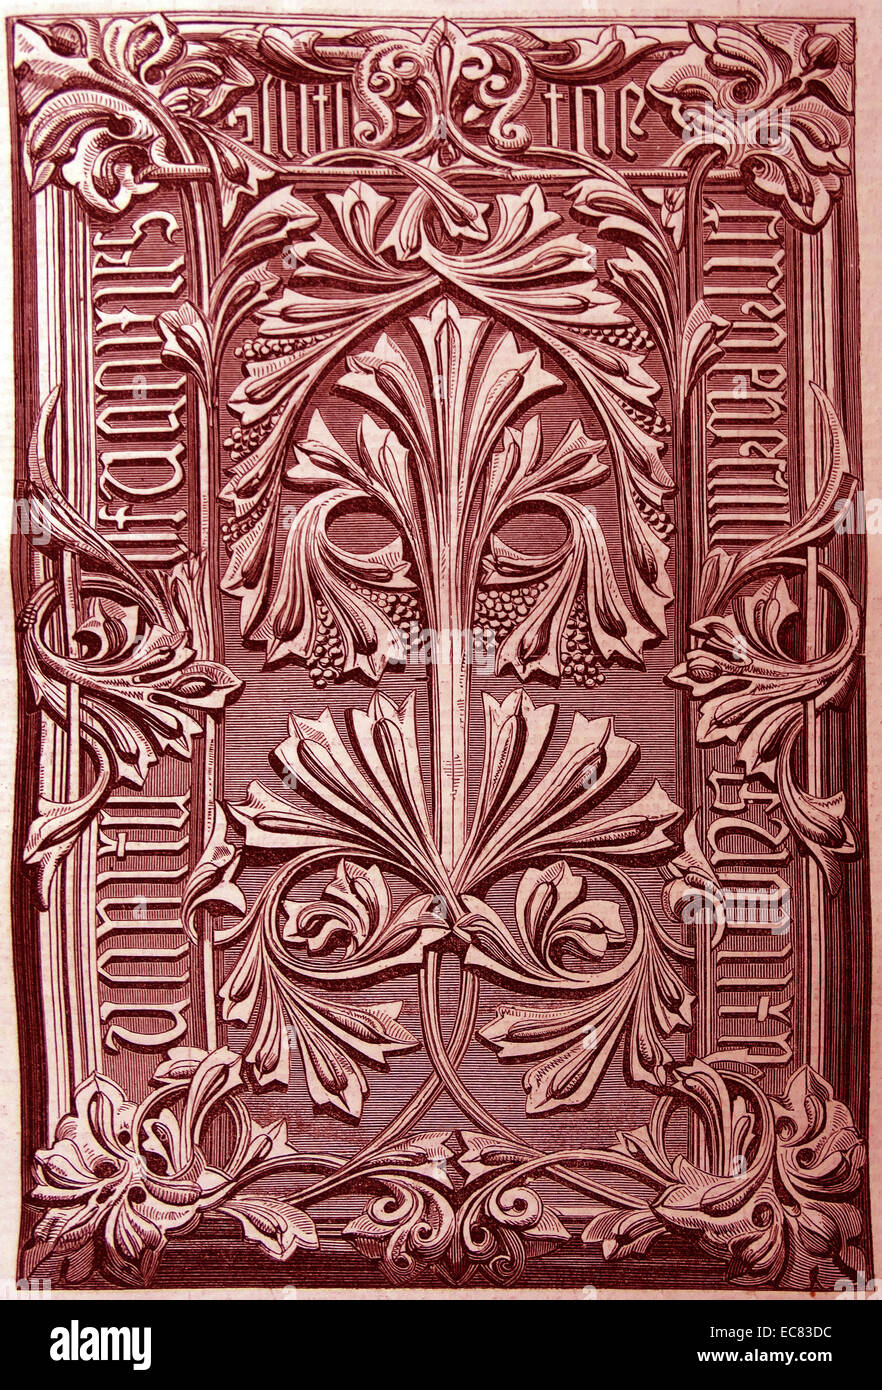 A Book cover by Martin's Ceramic Papier-Mach process. Stock Photo